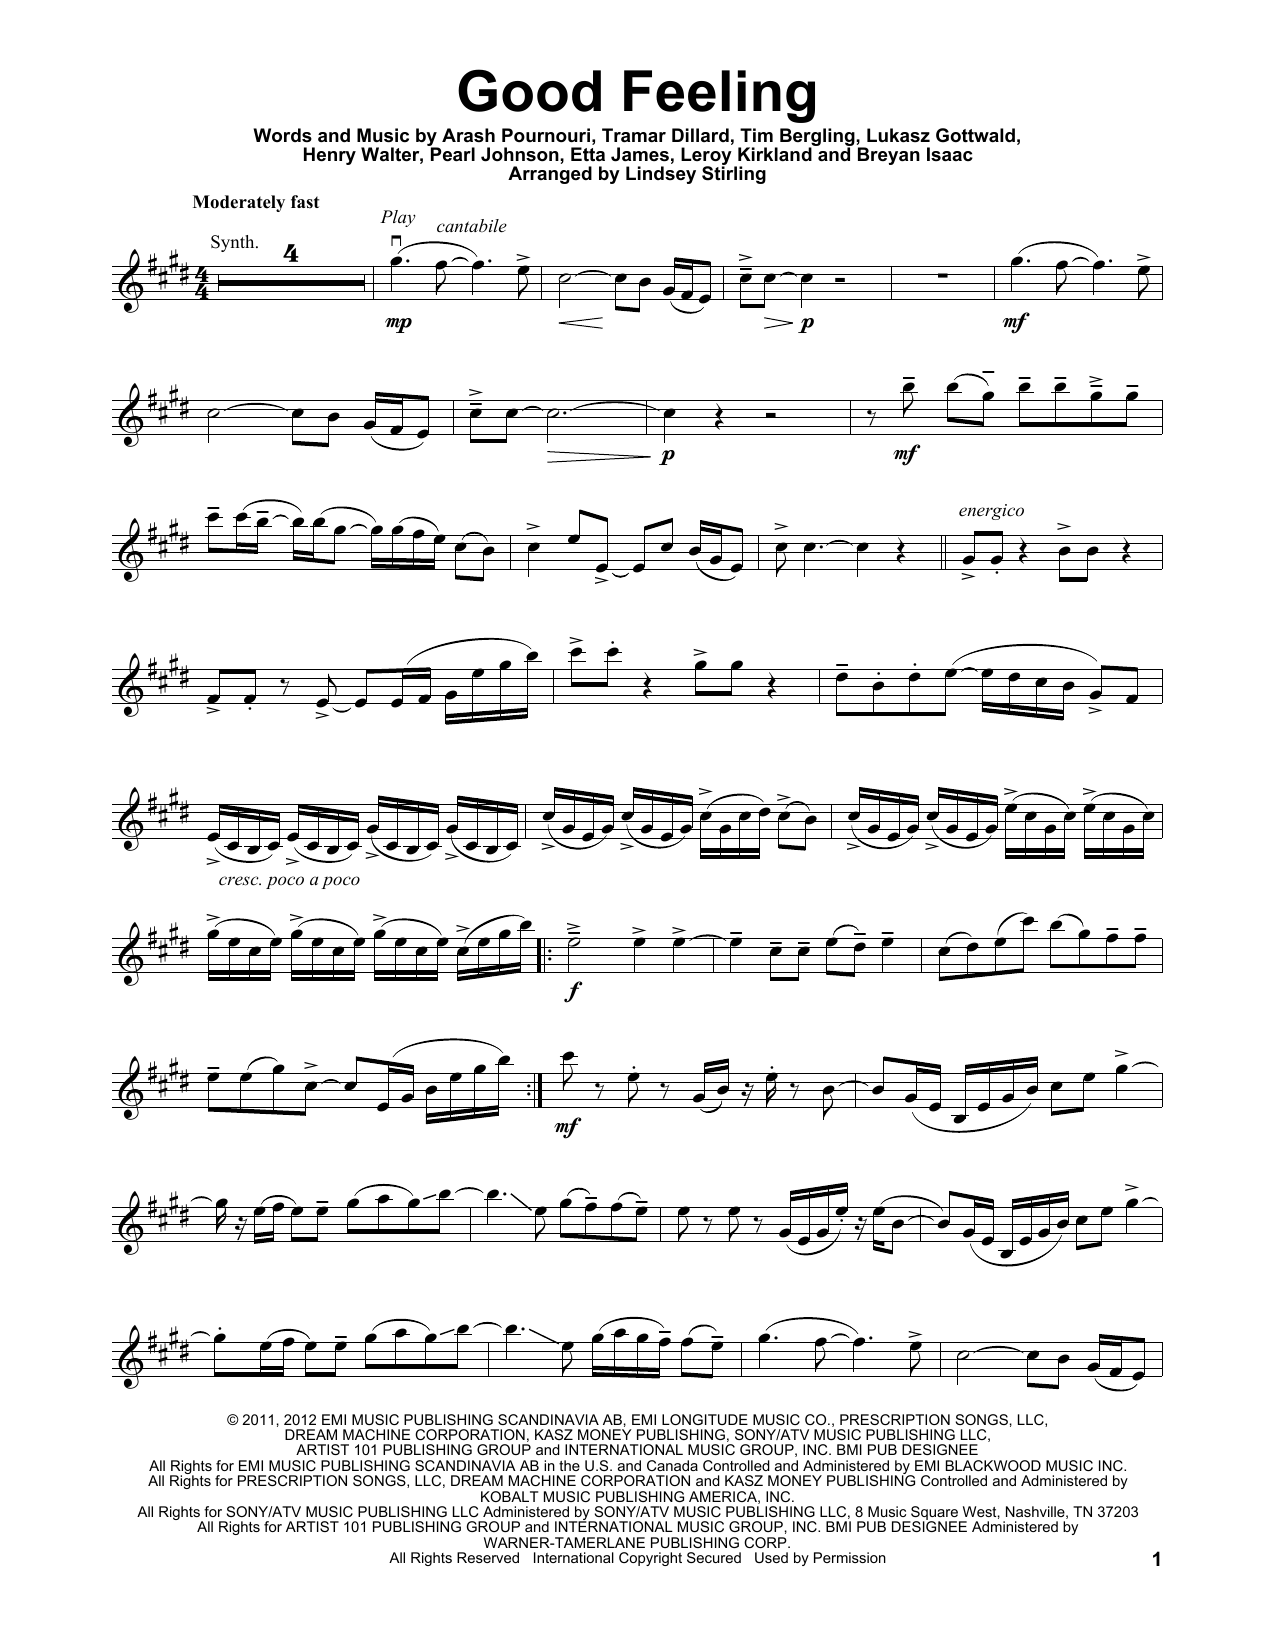 Lindsey Stirling Good Feeling Sheet Music Notes & Chords for Violin - Download or Print PDF